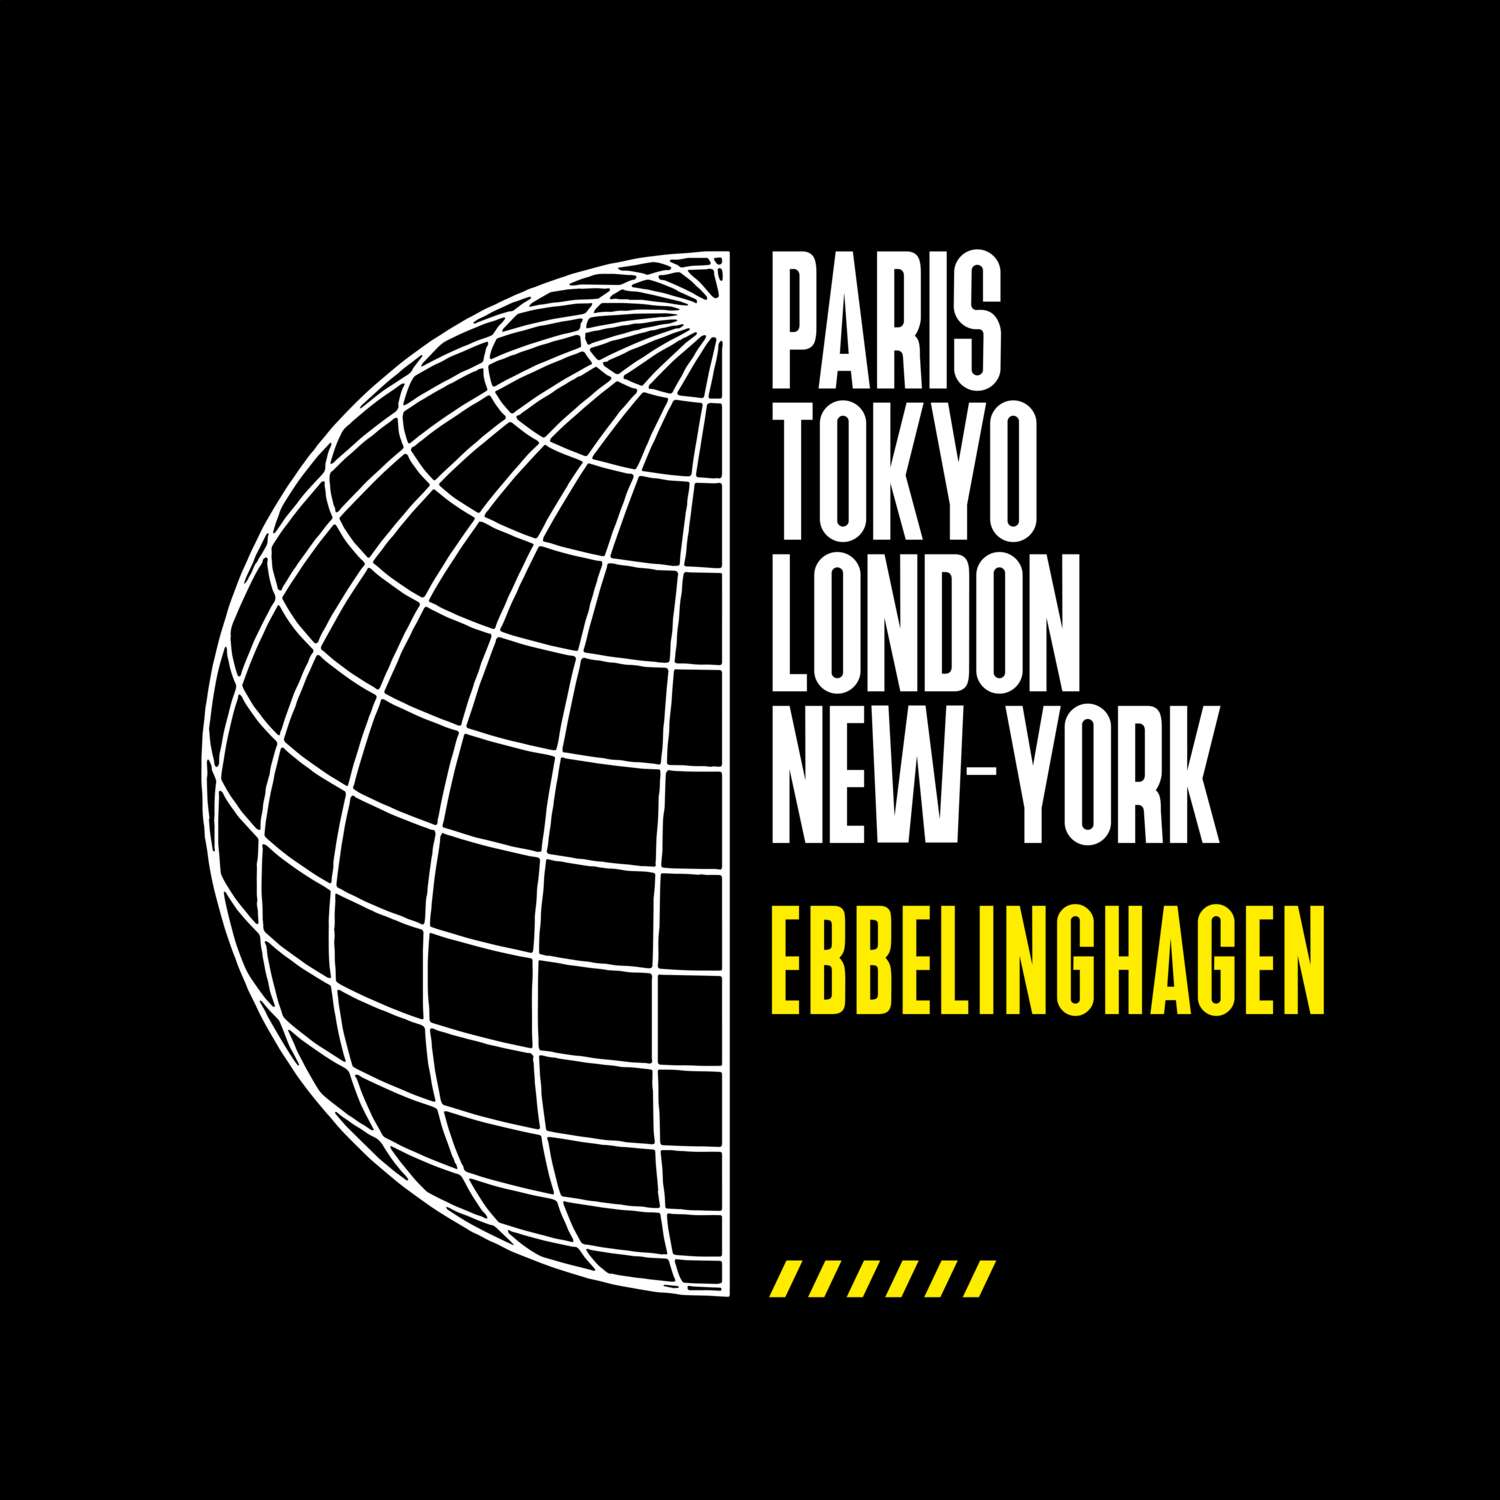 Ebbelinghagen T-Shirt »Paris Tokyo London«